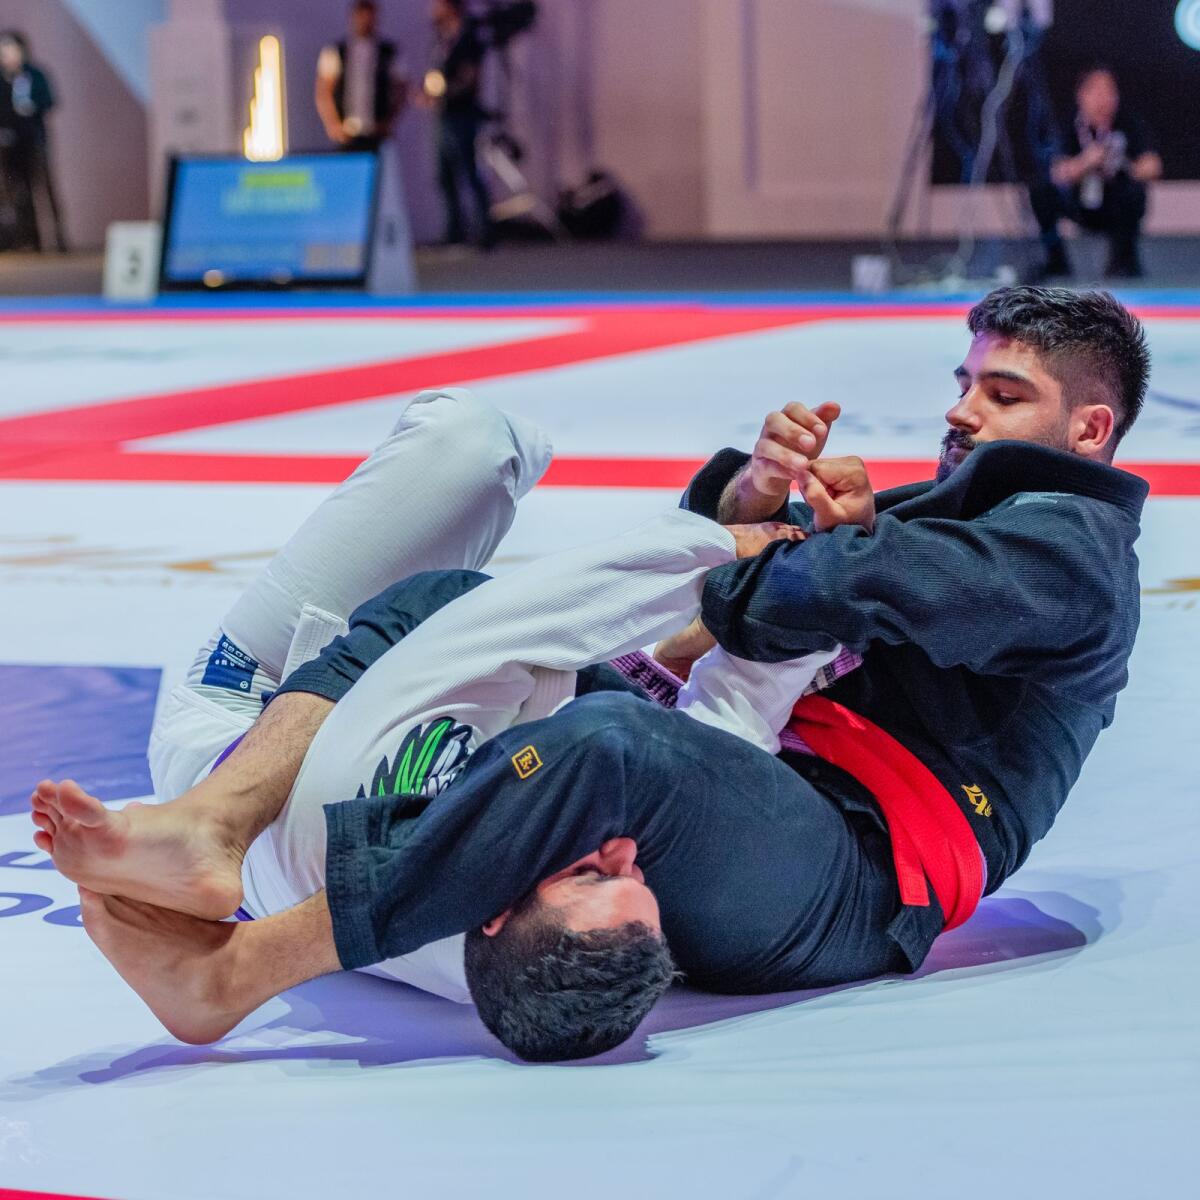 Highlights From The World Professional Jiu-Jitsu Championship In